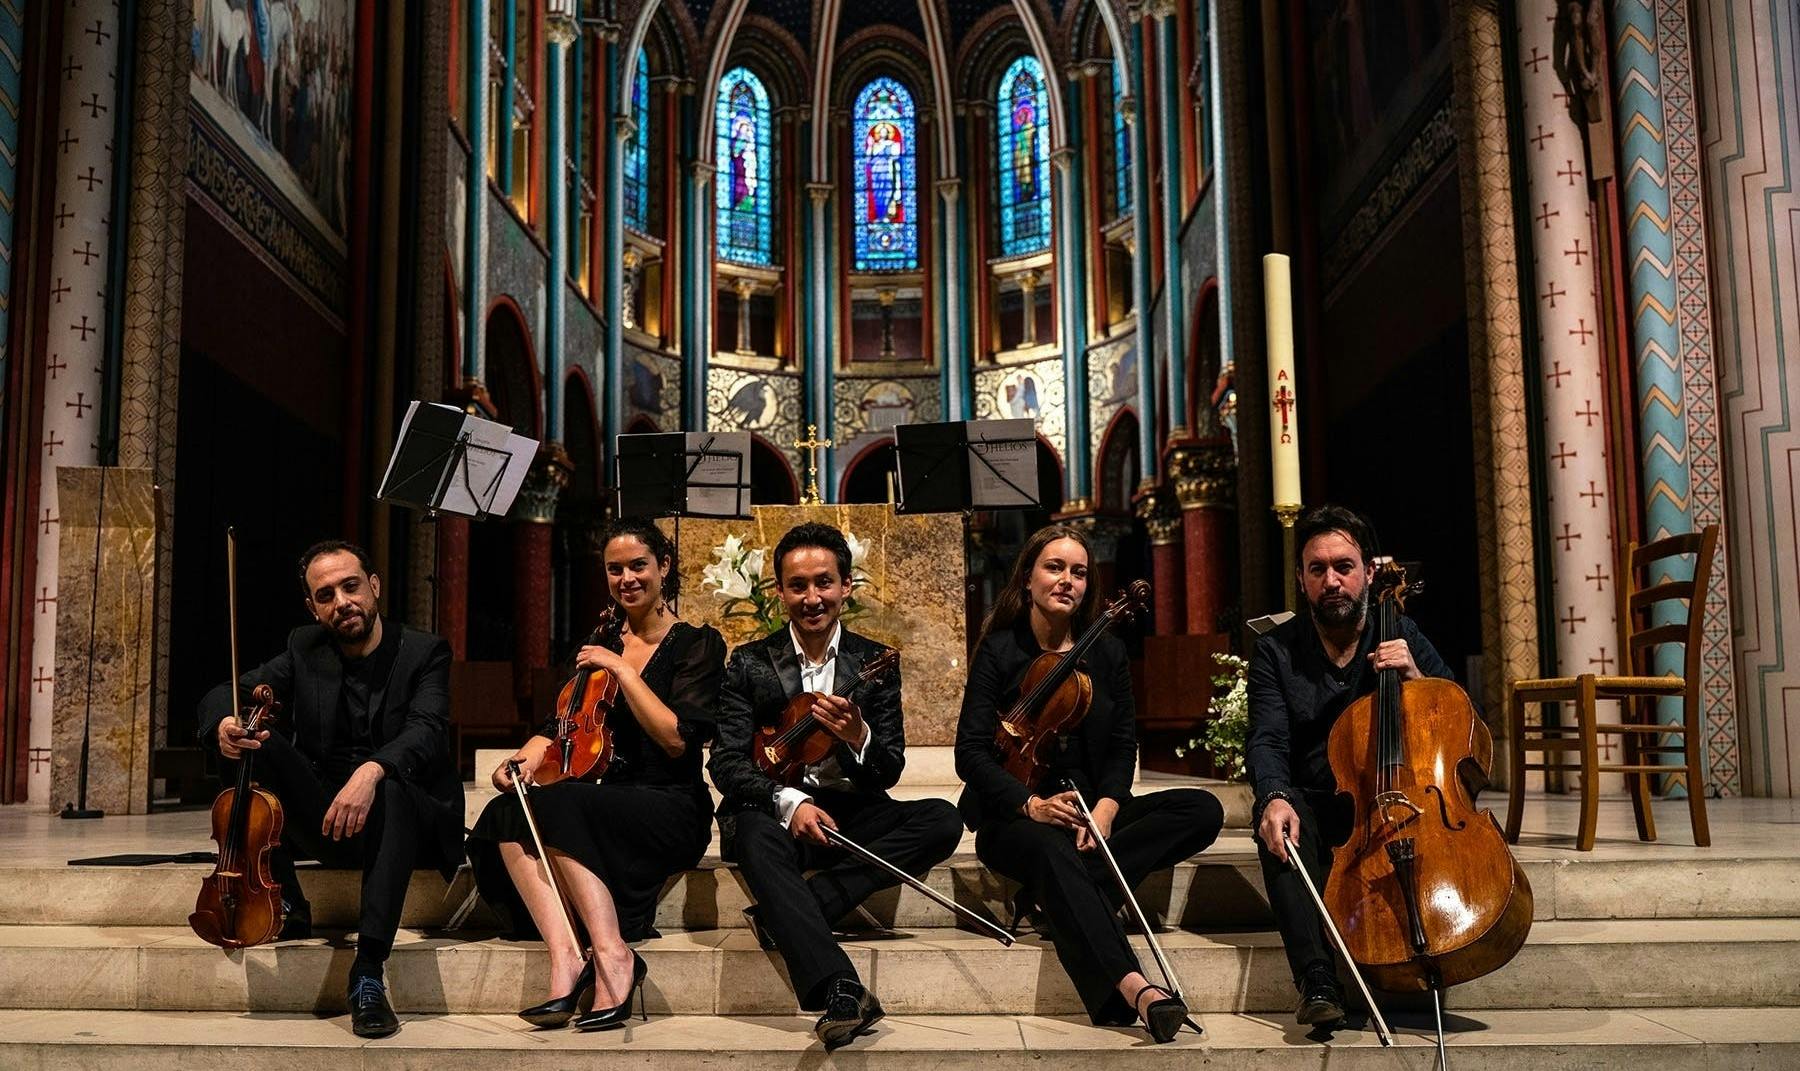 Biglietti per concerti di musica classica nella chiesa di Saint-Germain-des-Prés